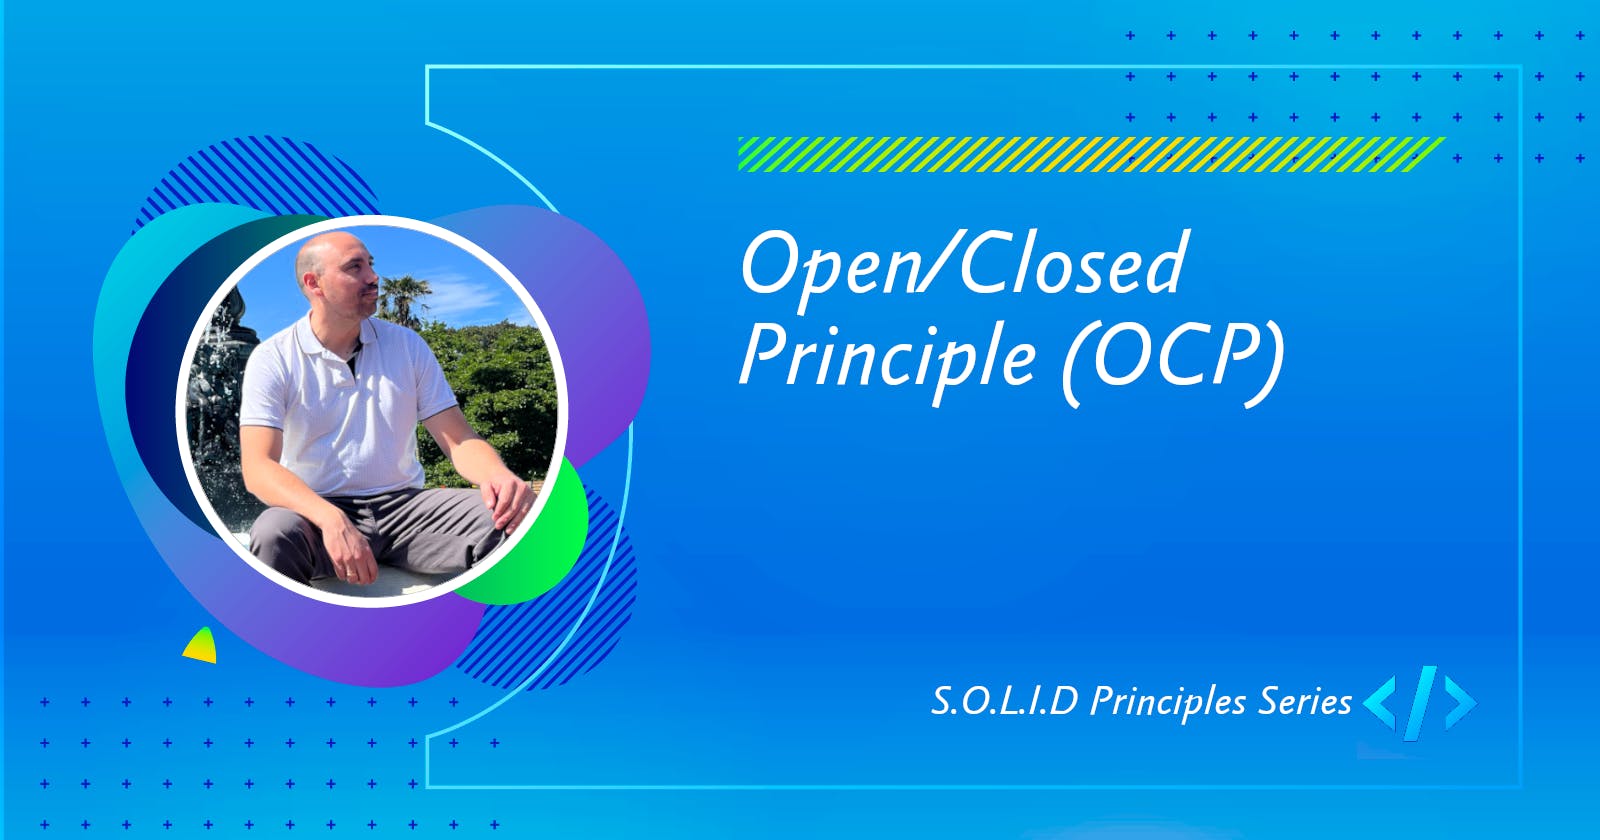 Open/Closed Principle (OCP)